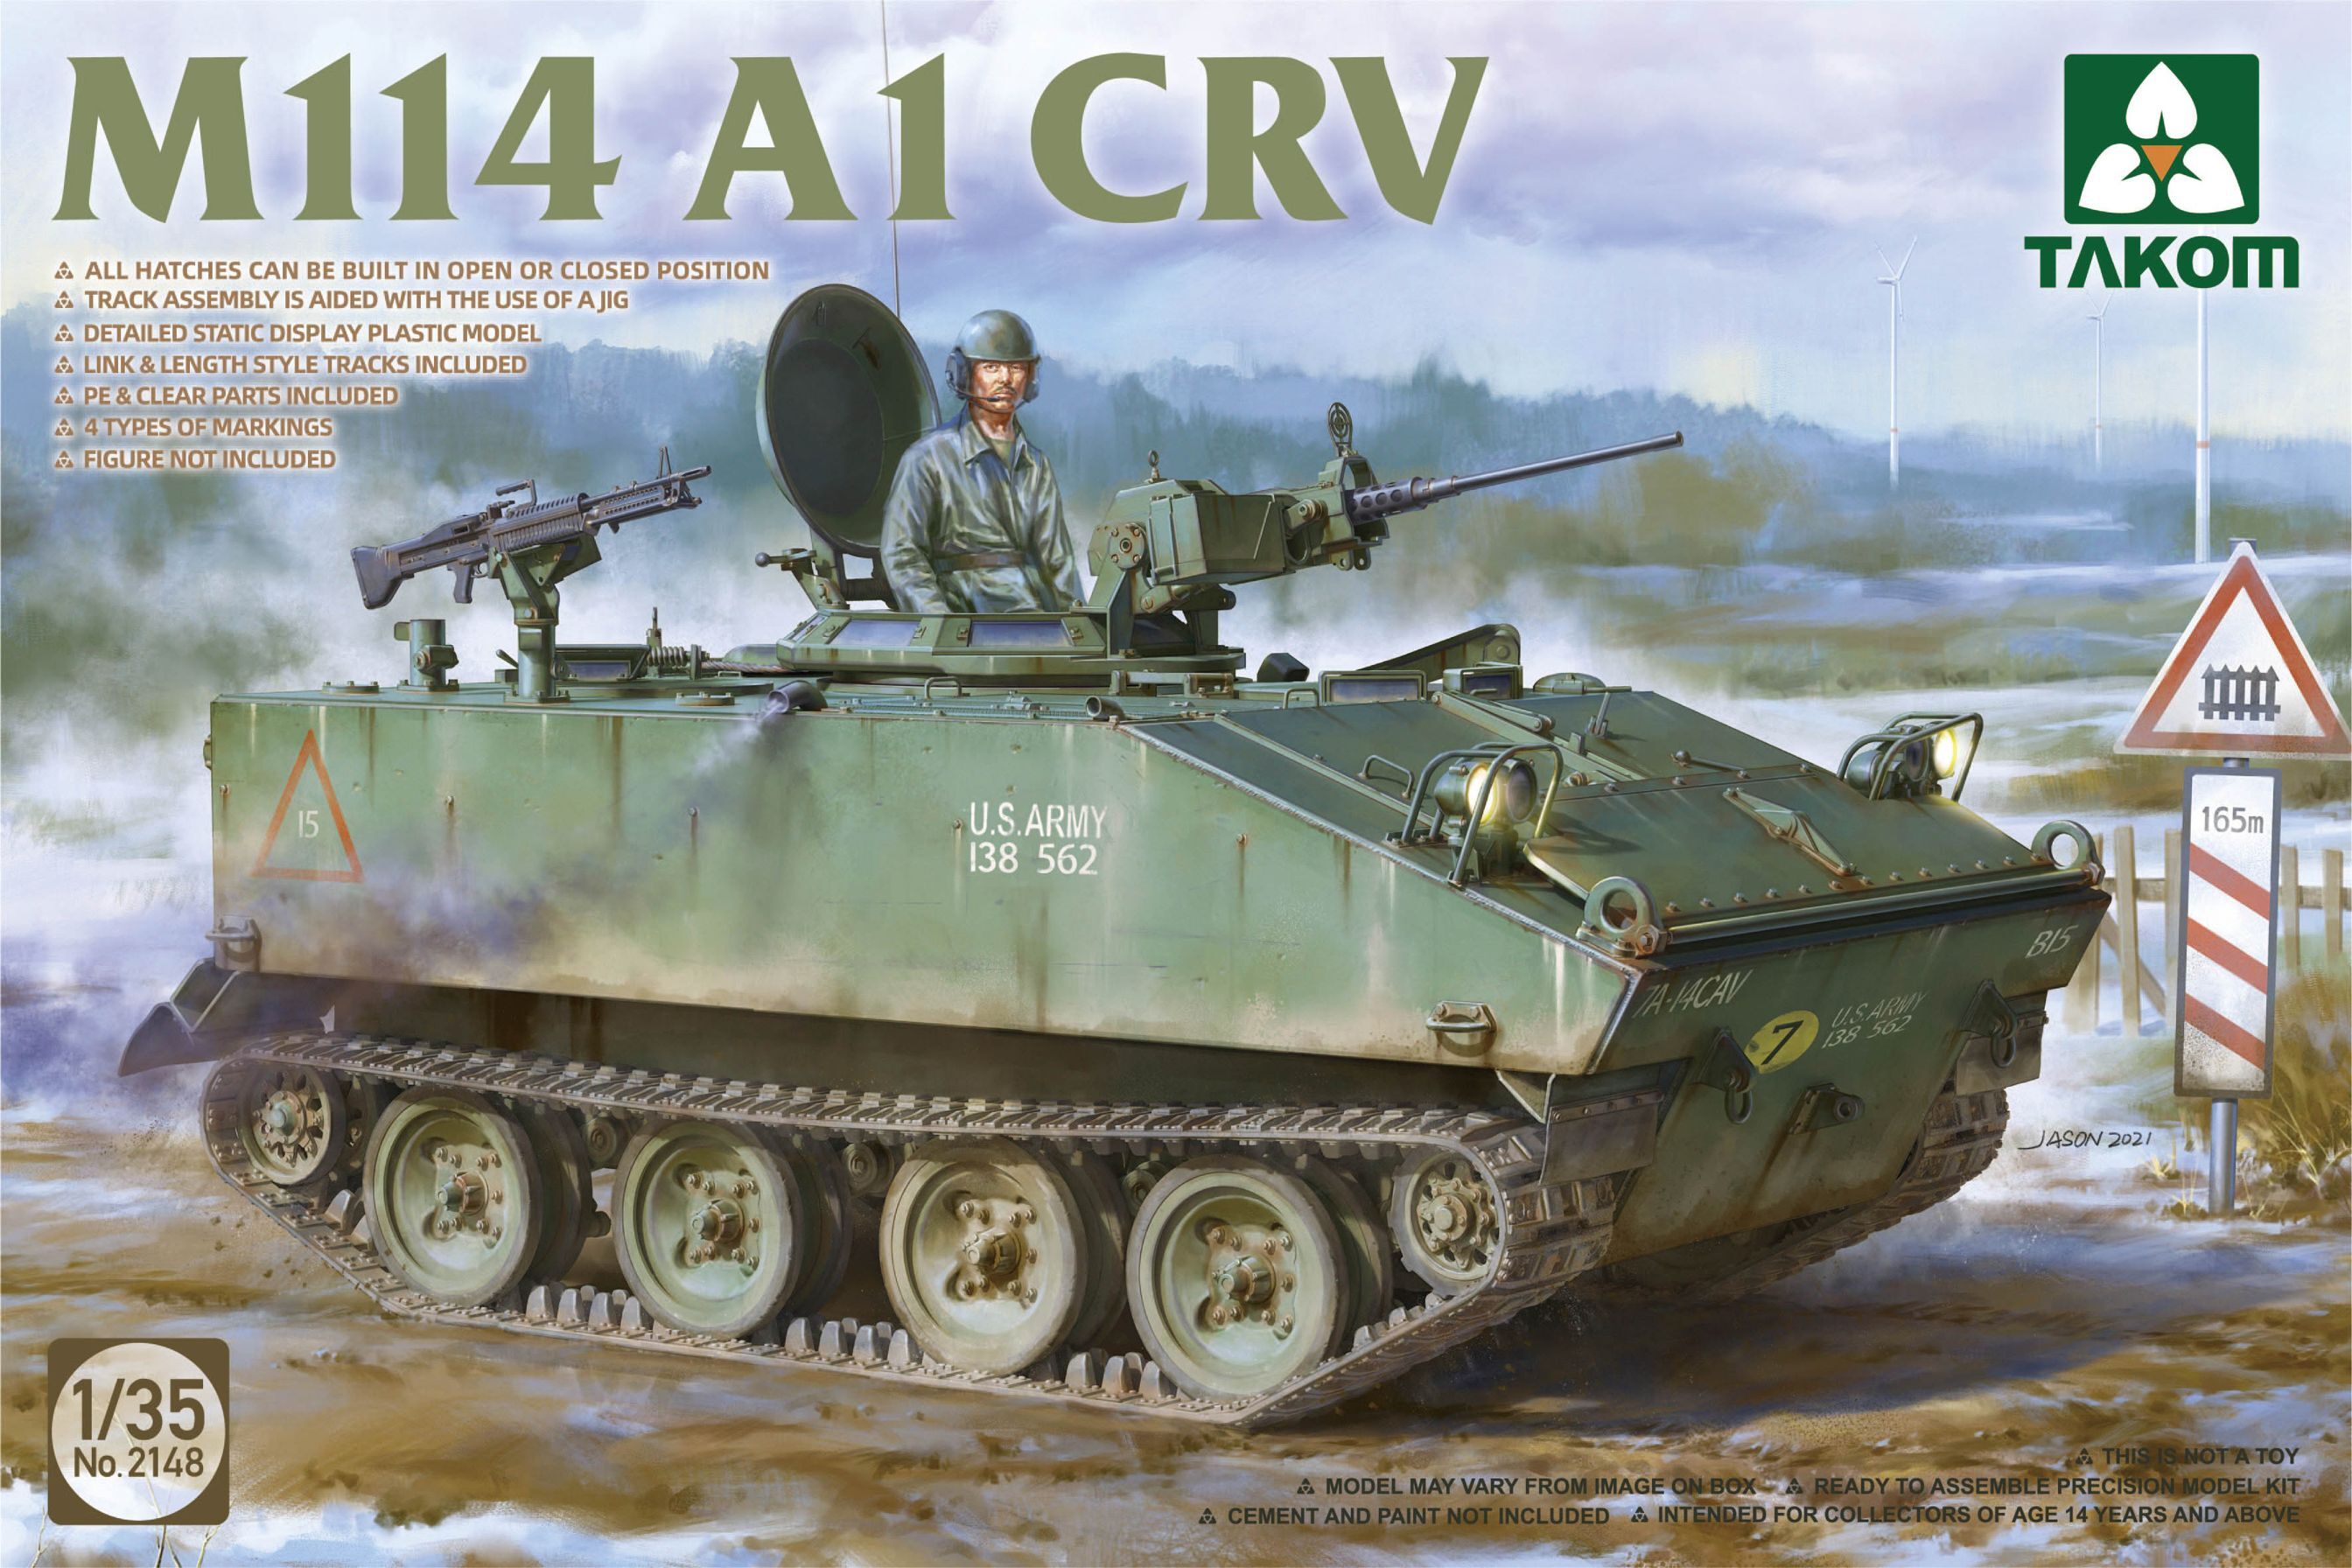 2148  техника и вооружение  M114 A1 CRV  (1:35)